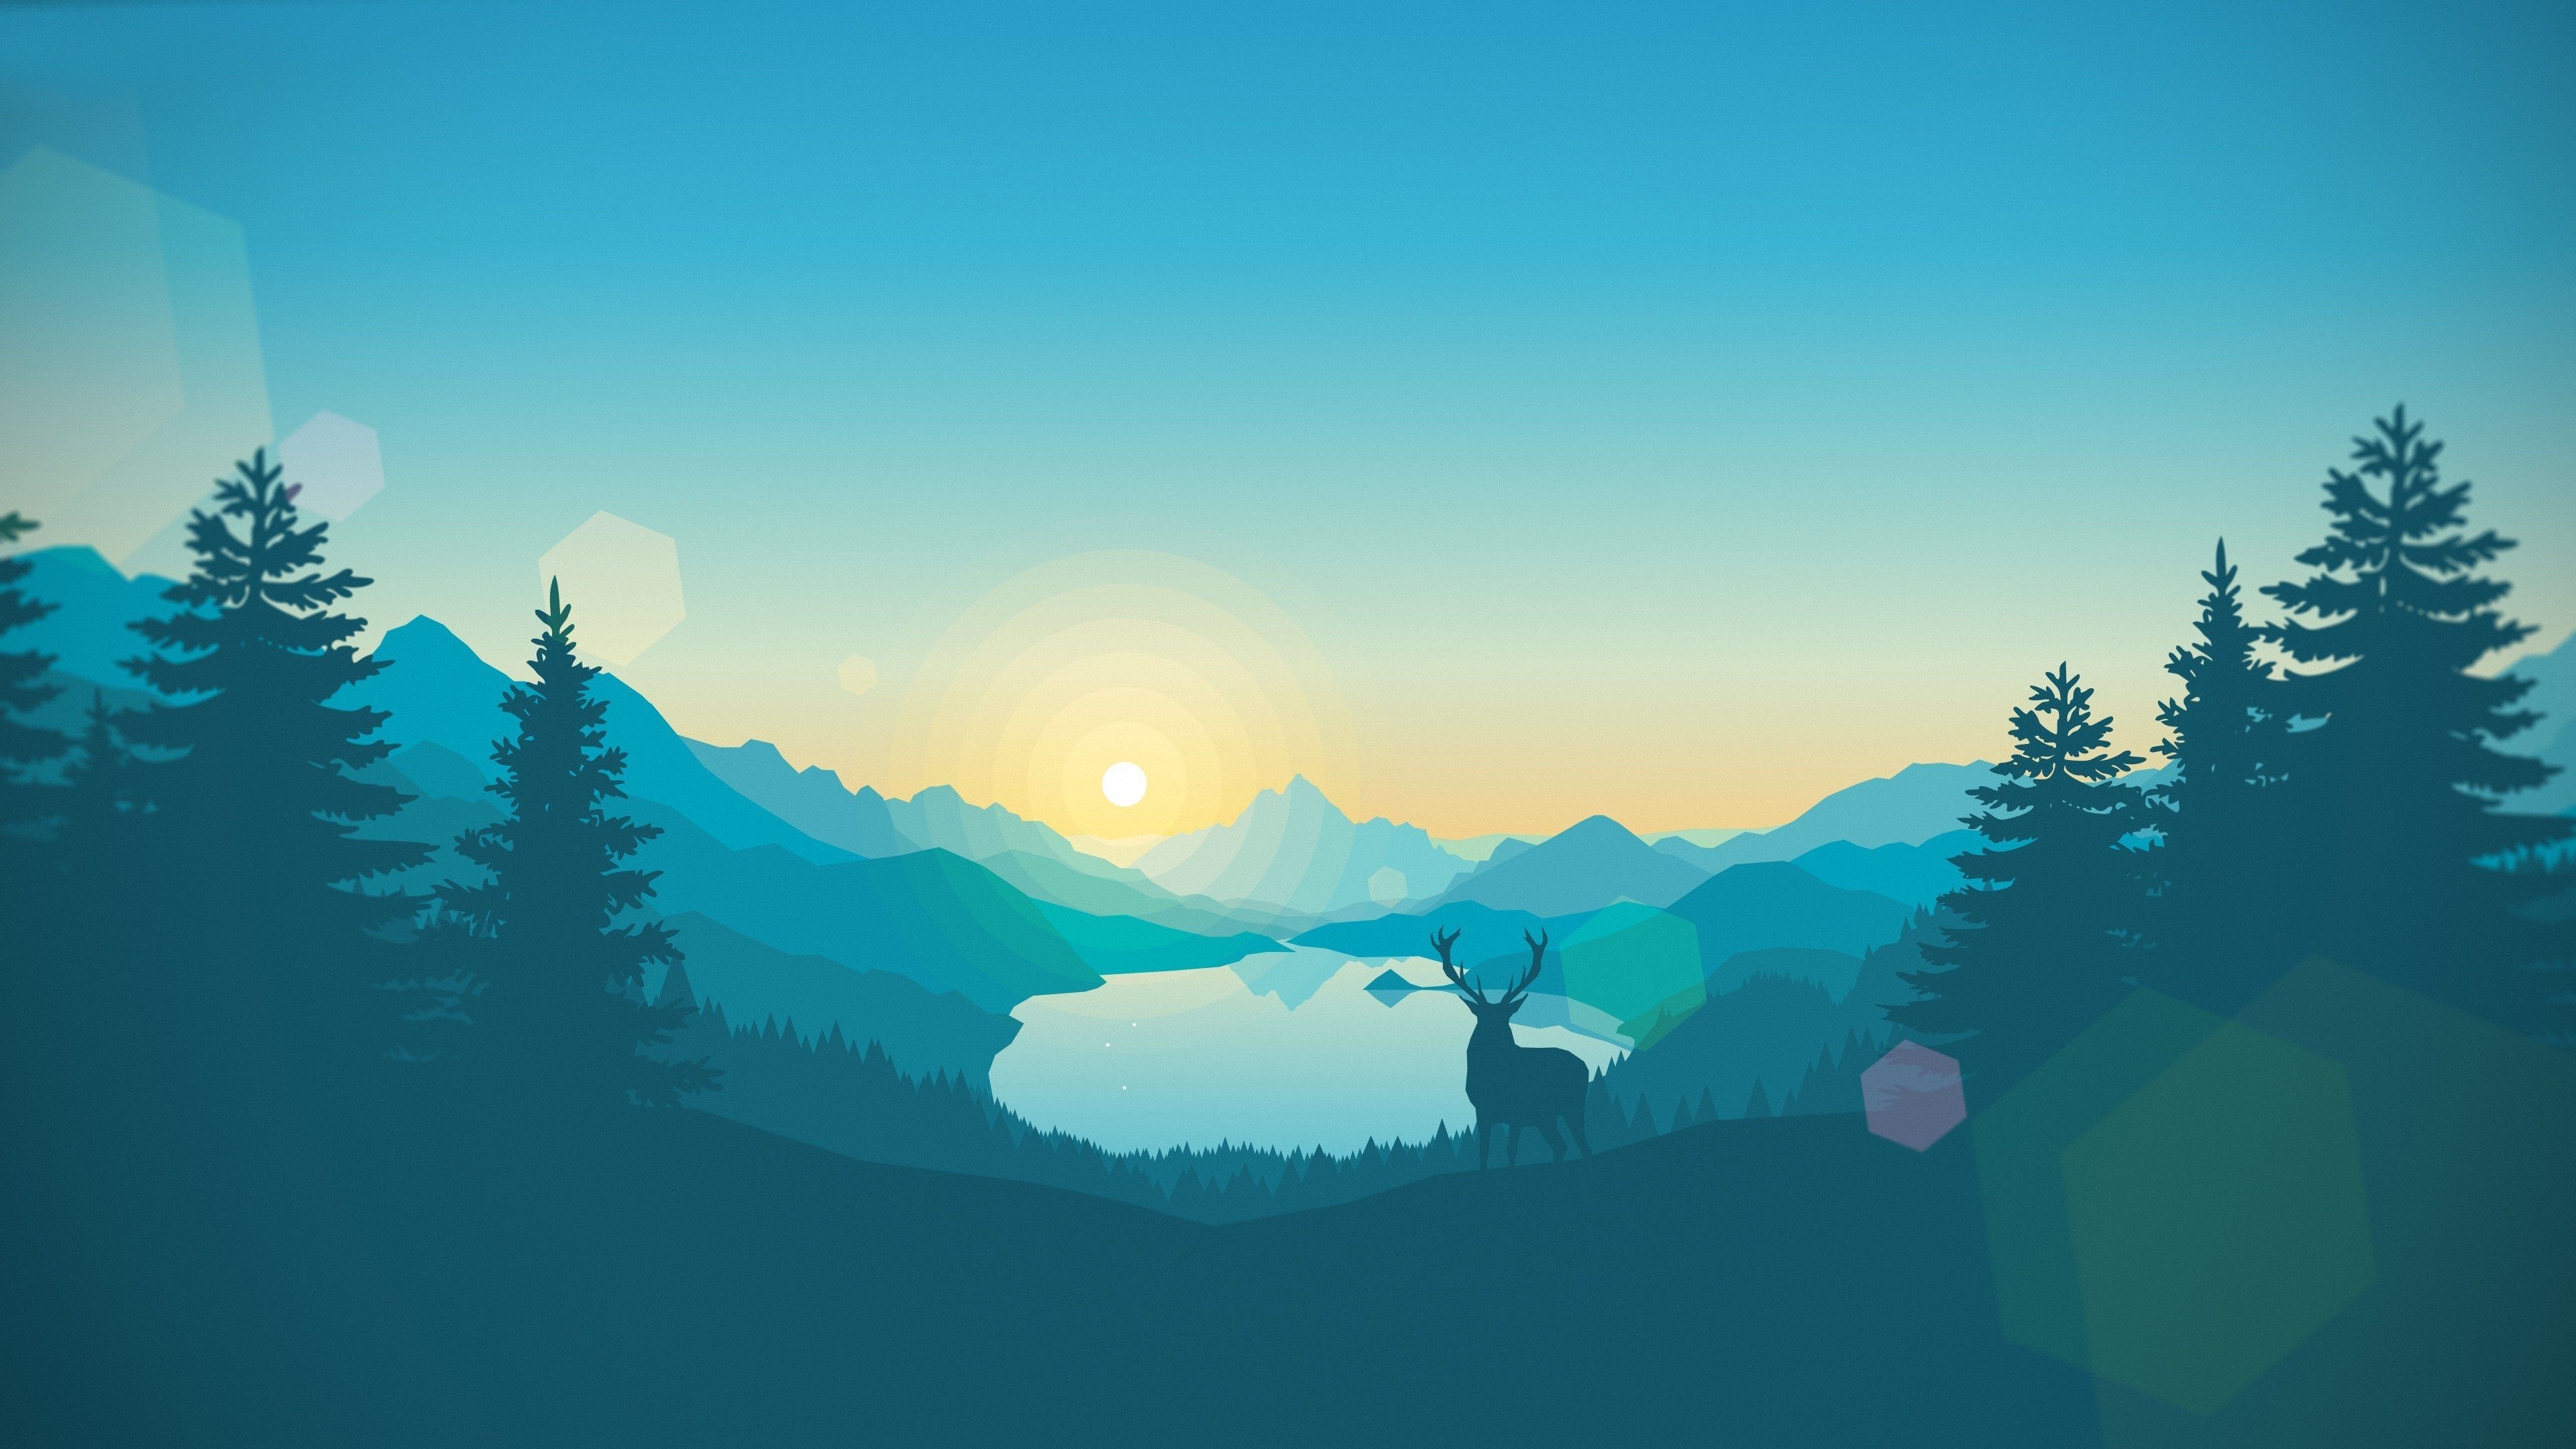 Wallpaper Vector design, landscape, mountains, lake, trees, deer 3840x2160 UHD 4K Picture, Image